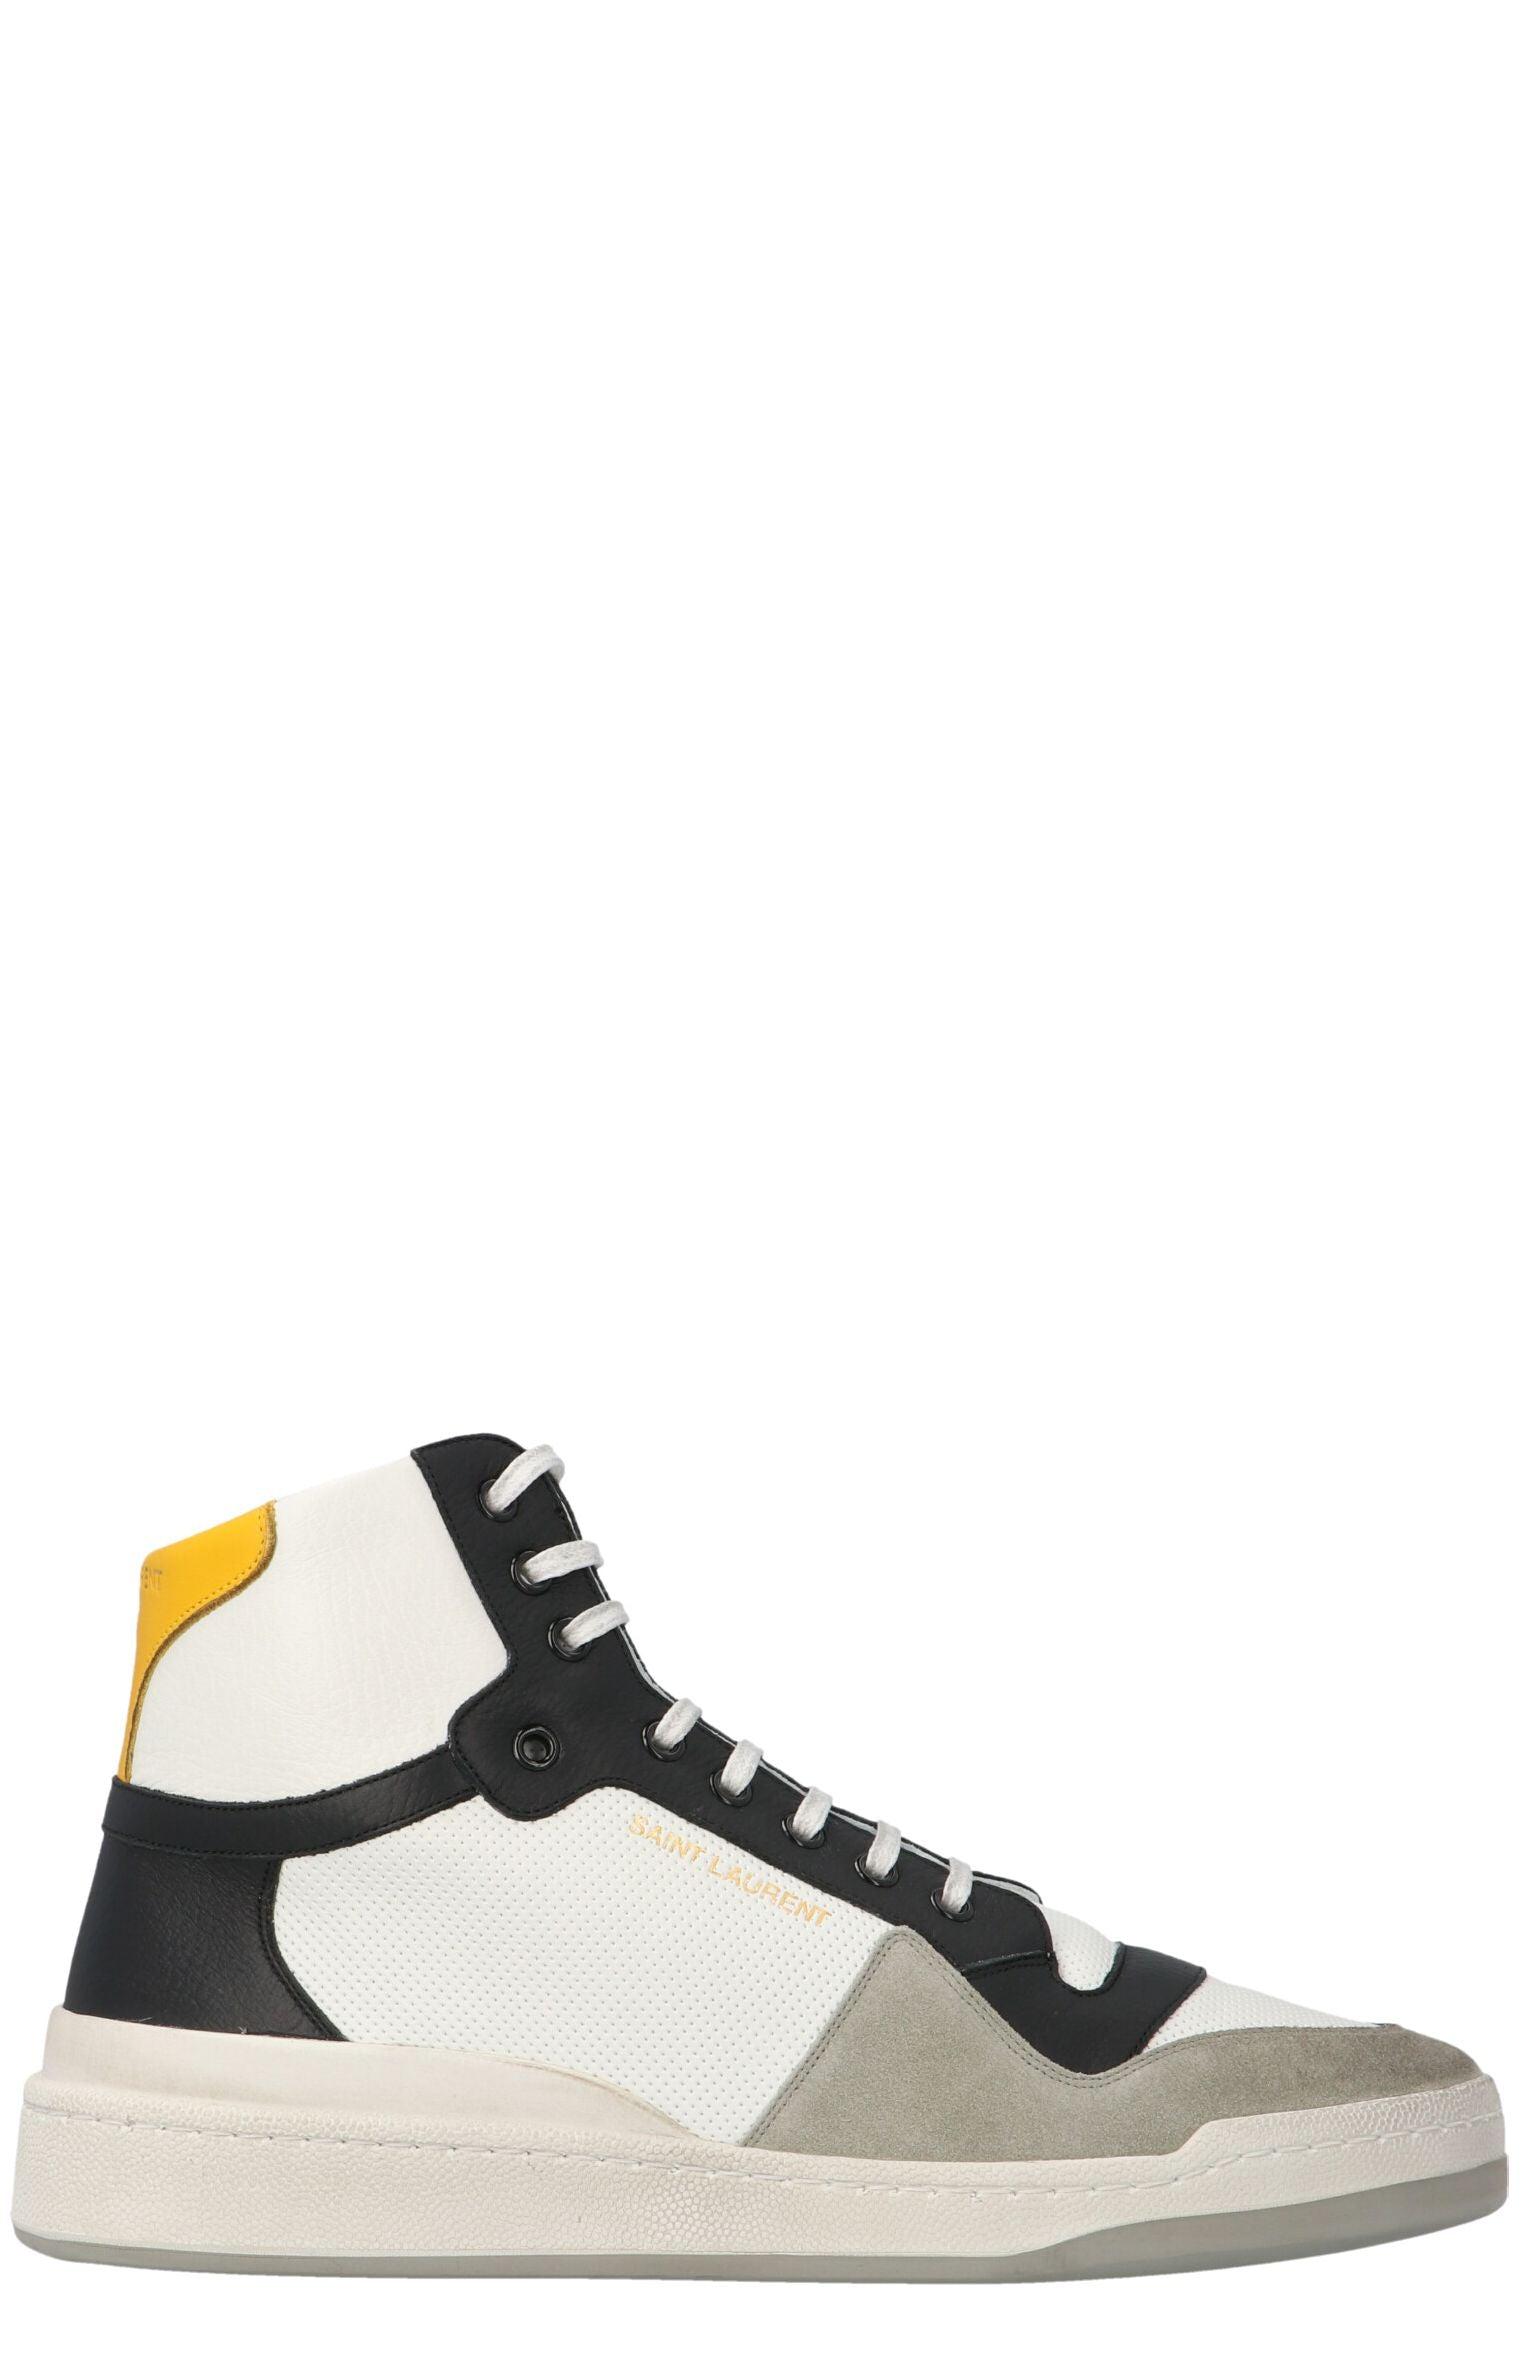 Saint Laurent Leather Sl24 High-top Sneakers for Men | Lyst